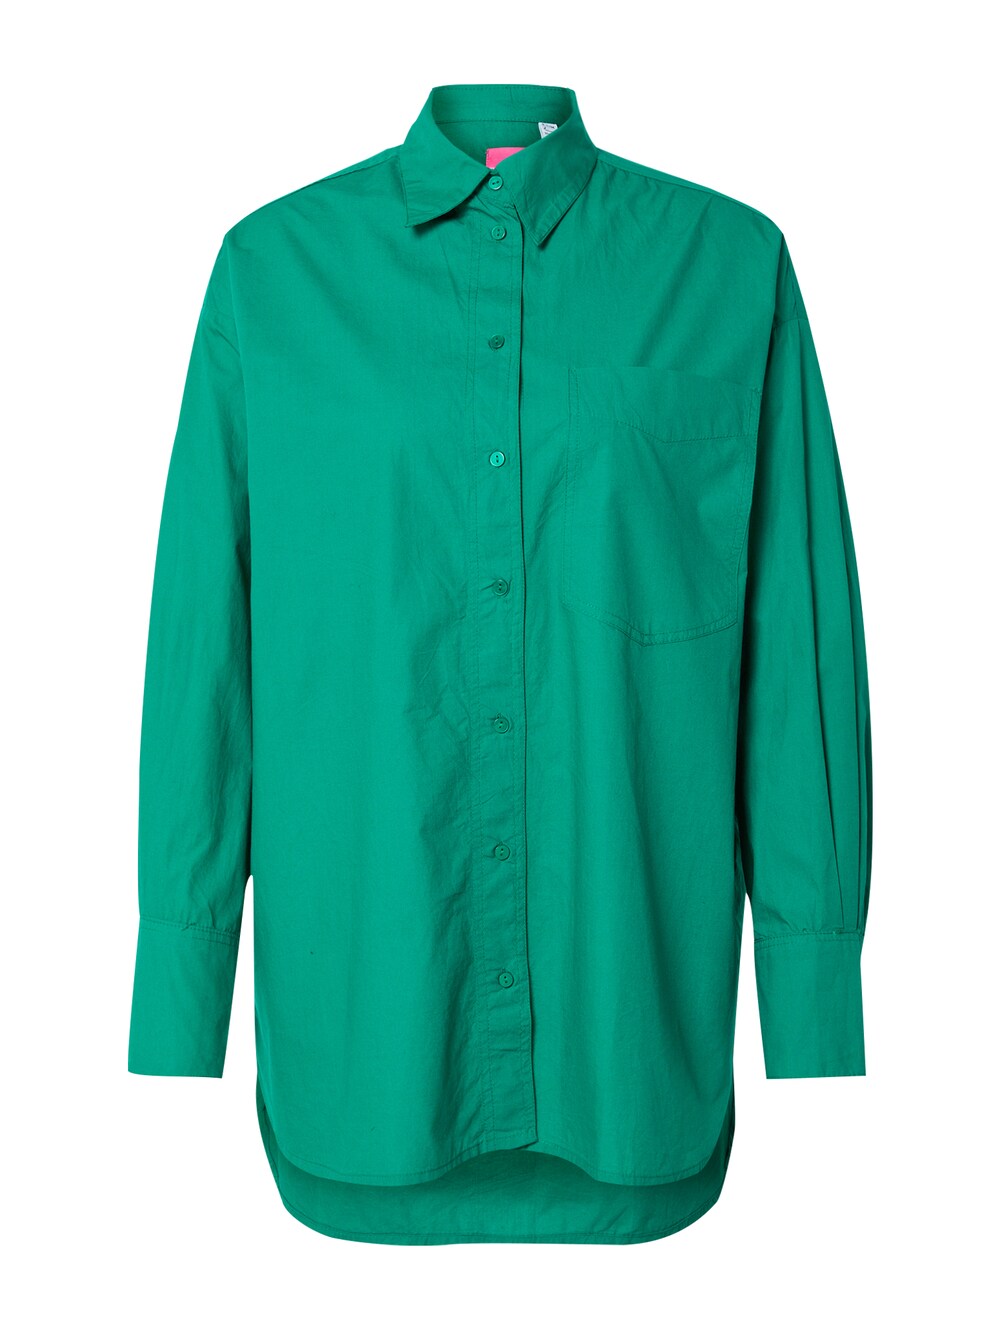 Блузка The Jogg Concept, темно-зеленый